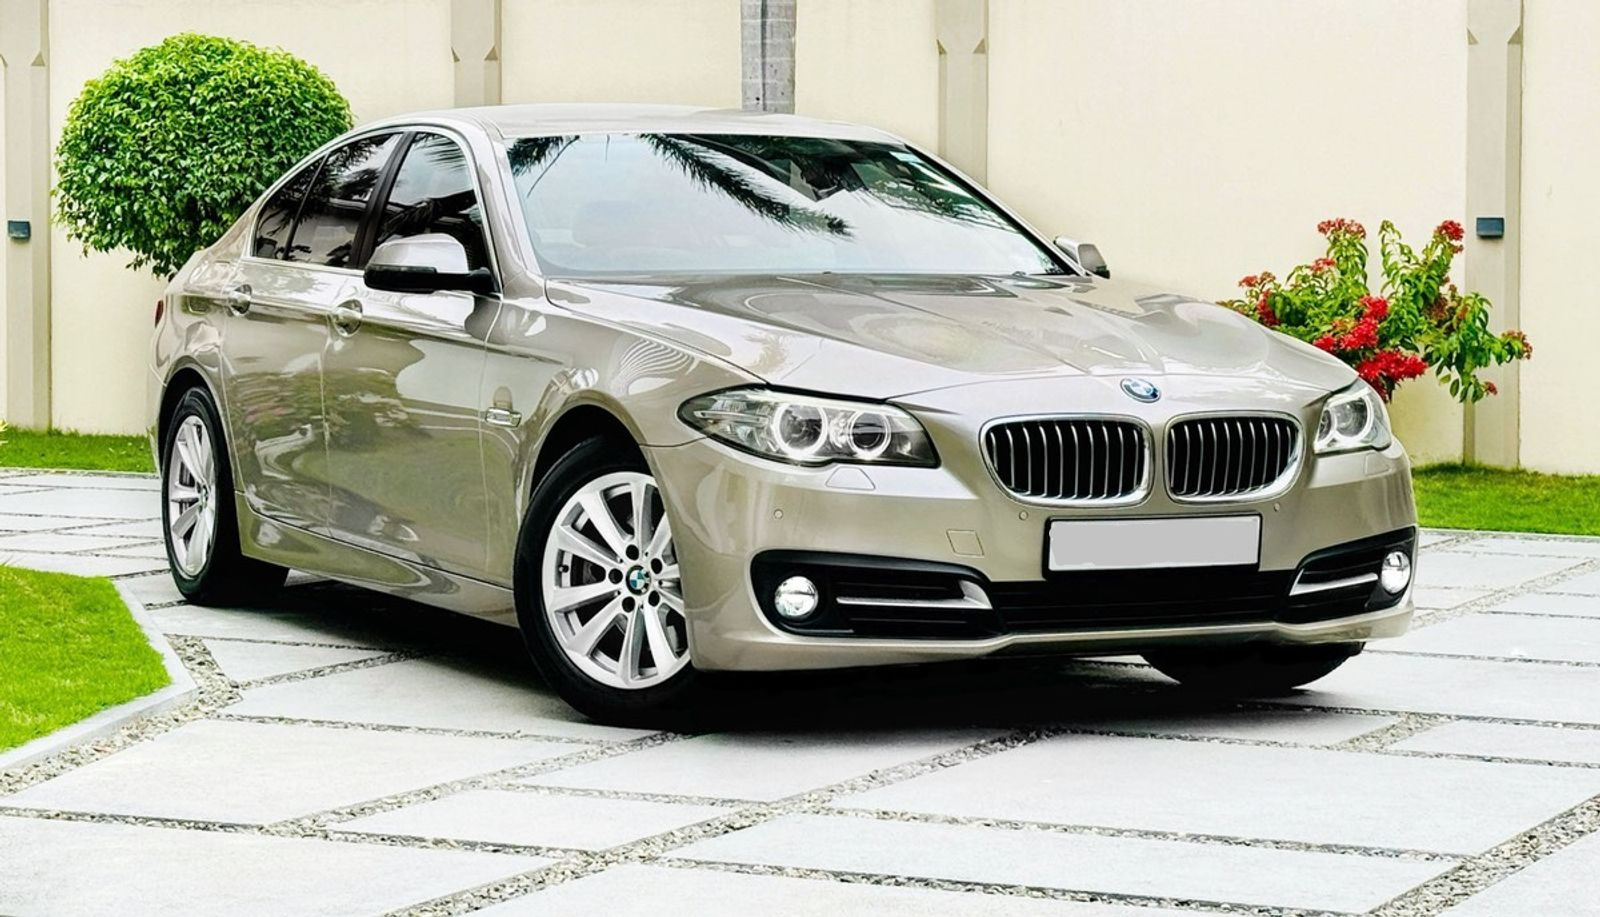 BMW 520d 2016 Review